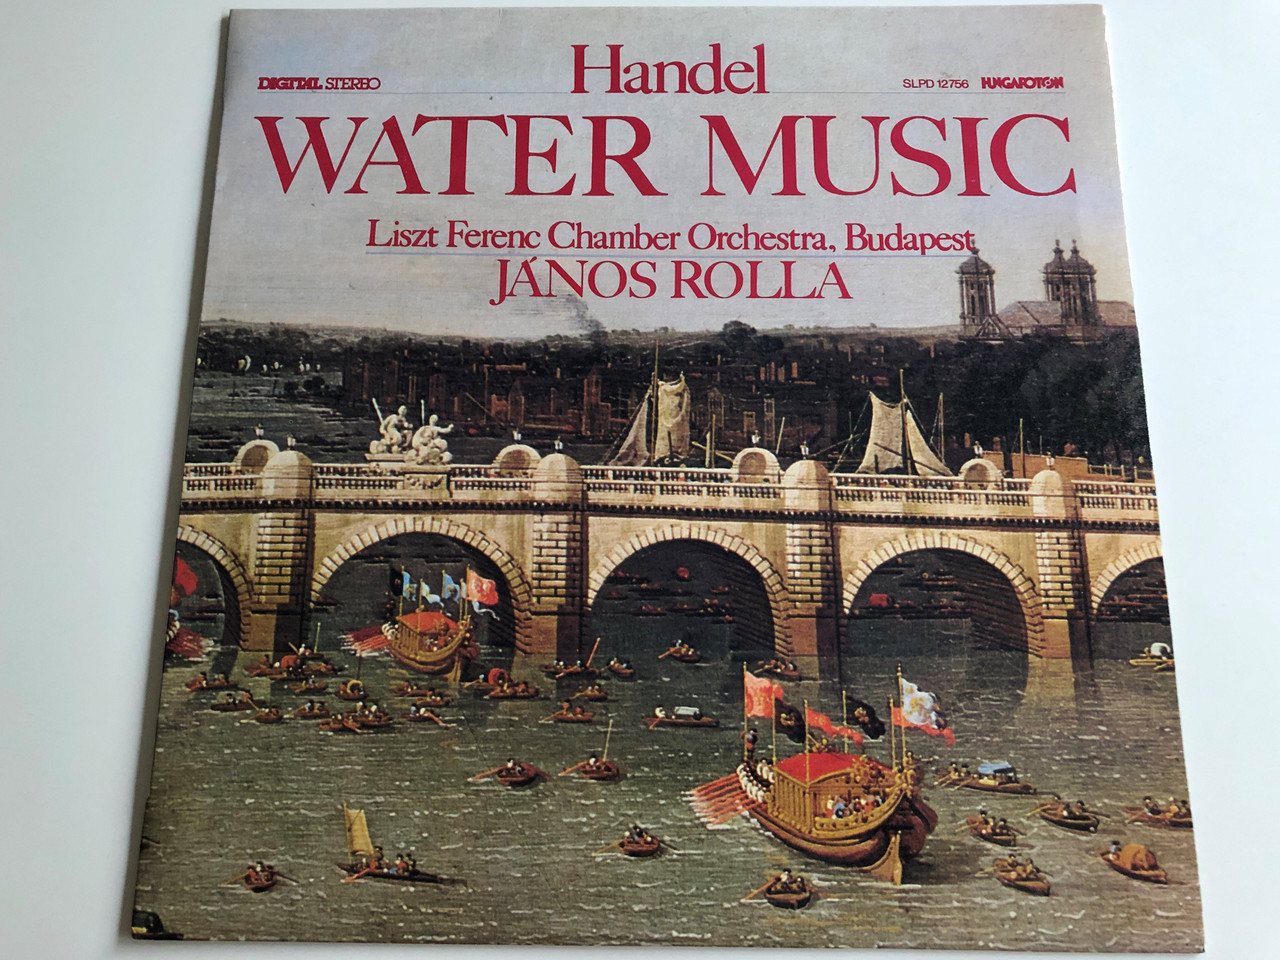 Handel - Water Music - Vizi Zene / Liszt Ferenc, Chamber Orchestra,  Budapest / Directed: János Rolla ‎/ HUNGAROTON LP DIGITAL STEREO / SLPD  12756 - bibleinmylanguage